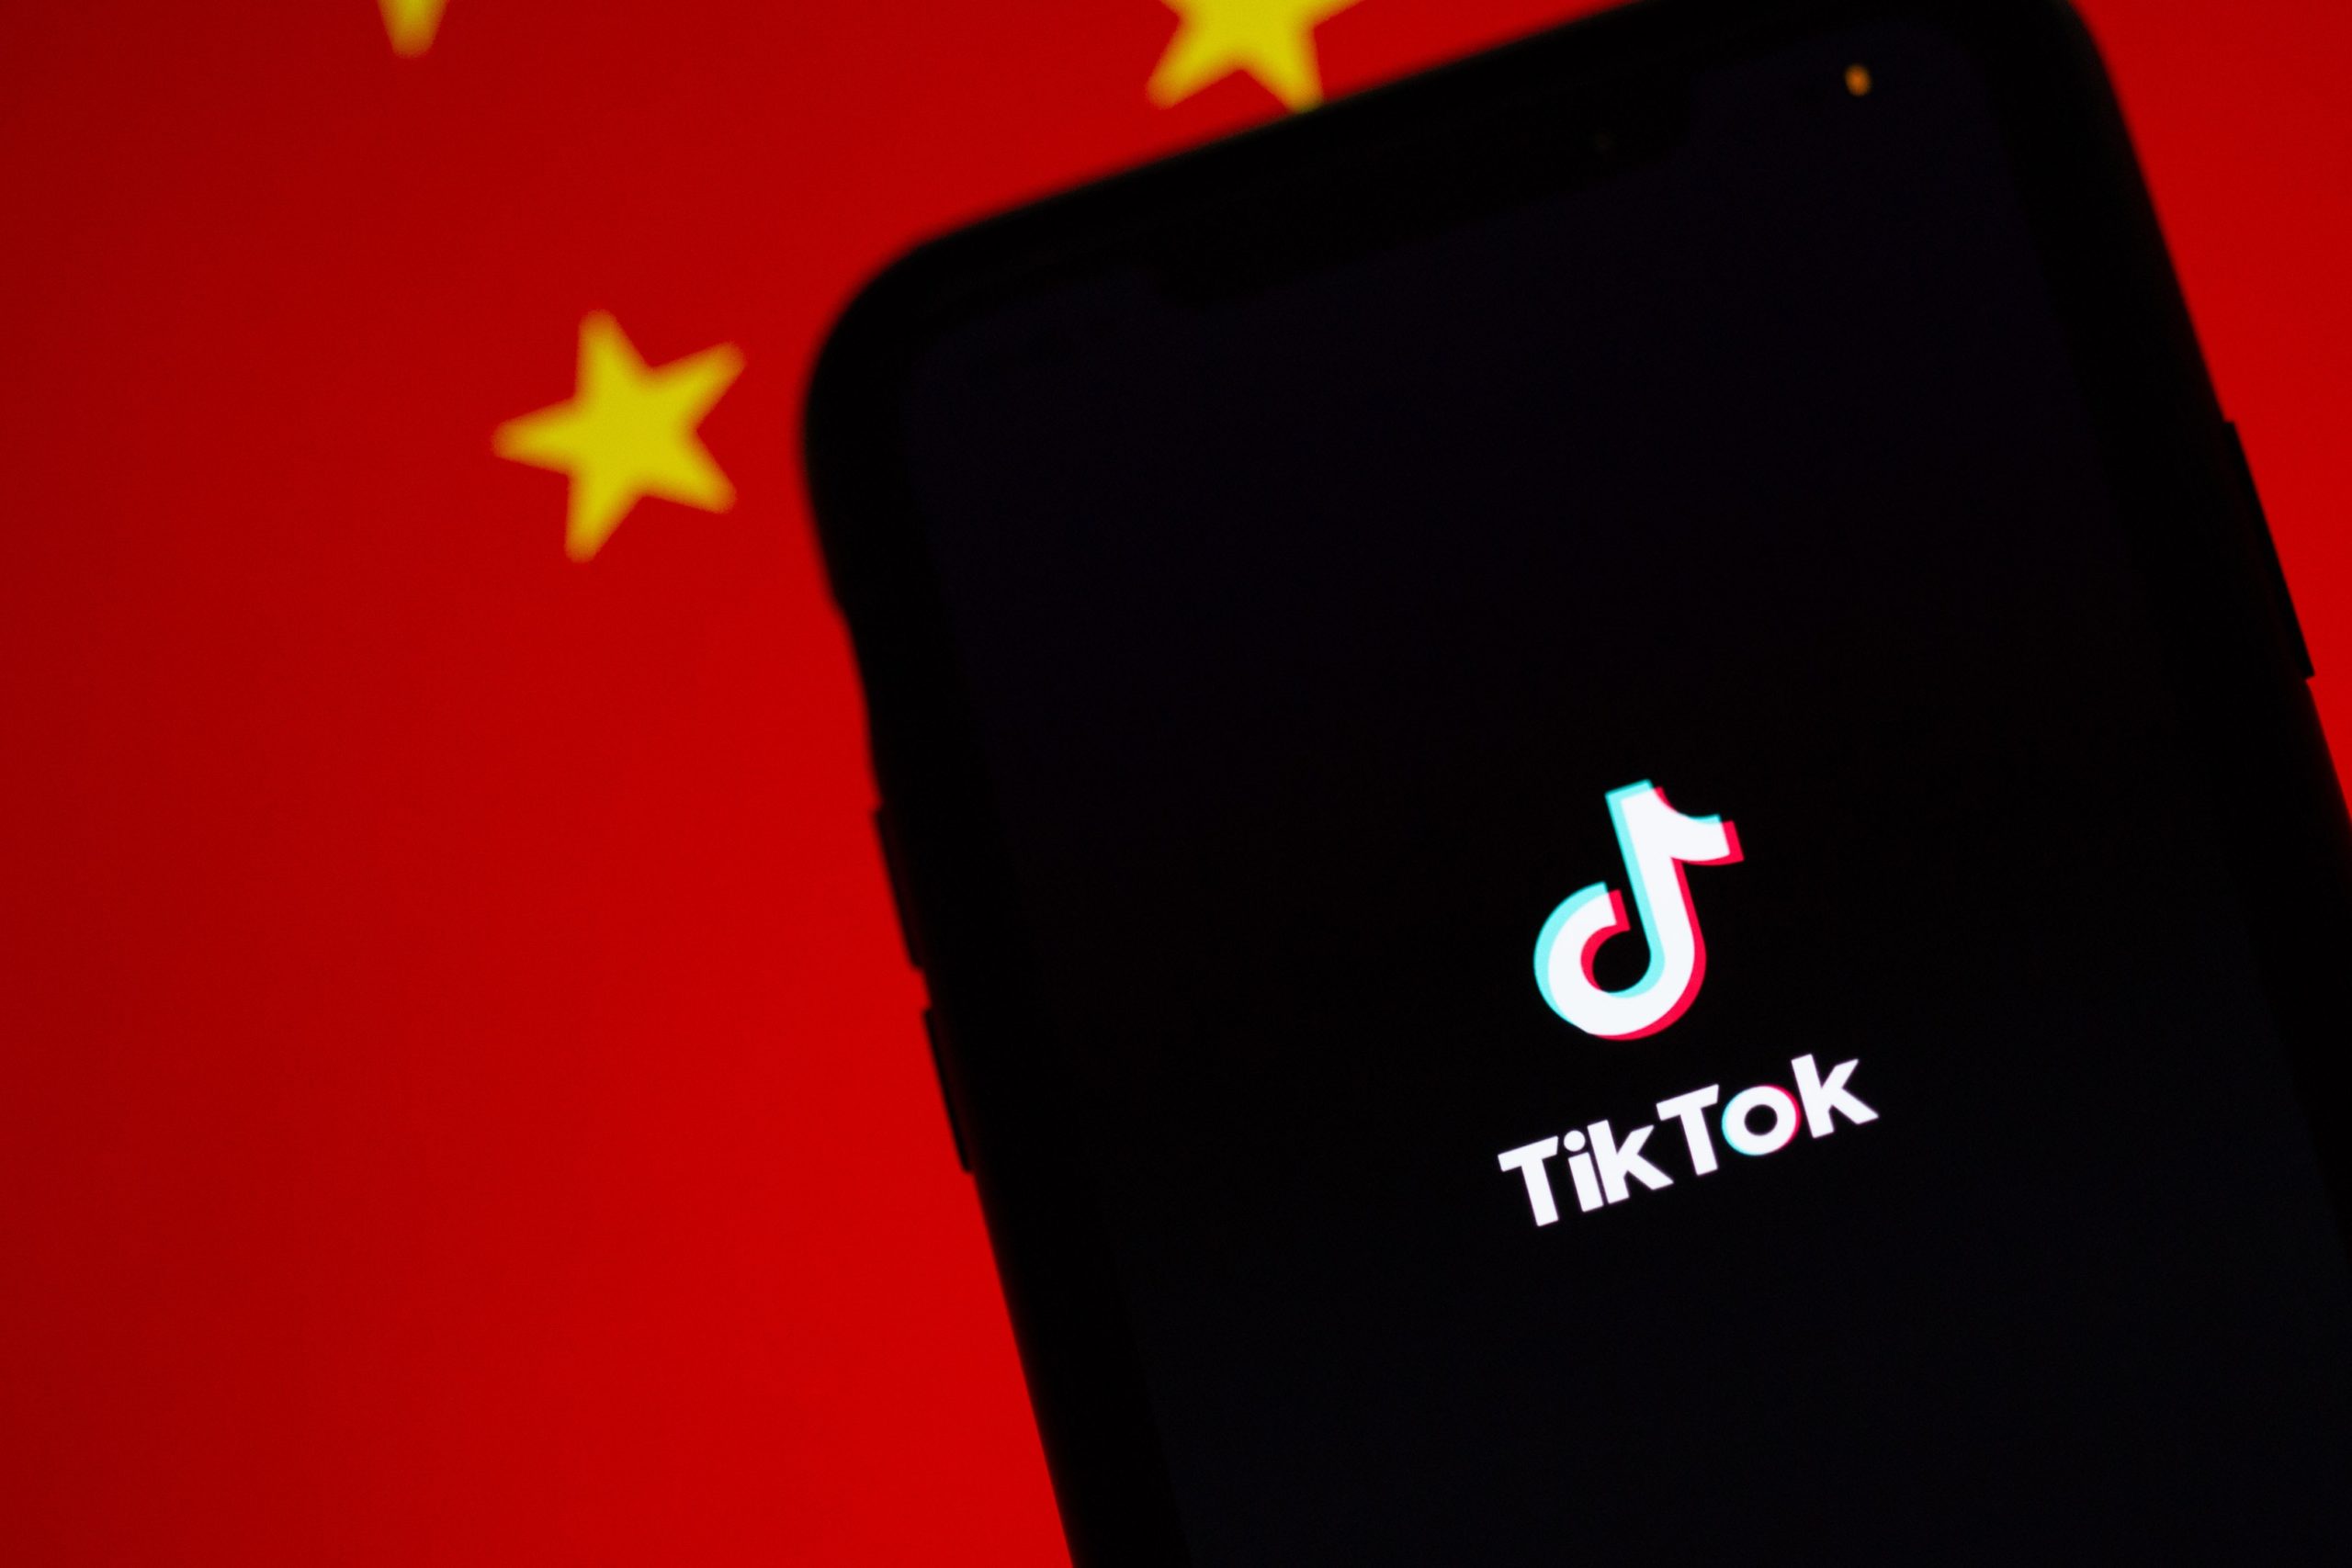 TikTok's 'Product Overload' Trend Is Dangerous, According to